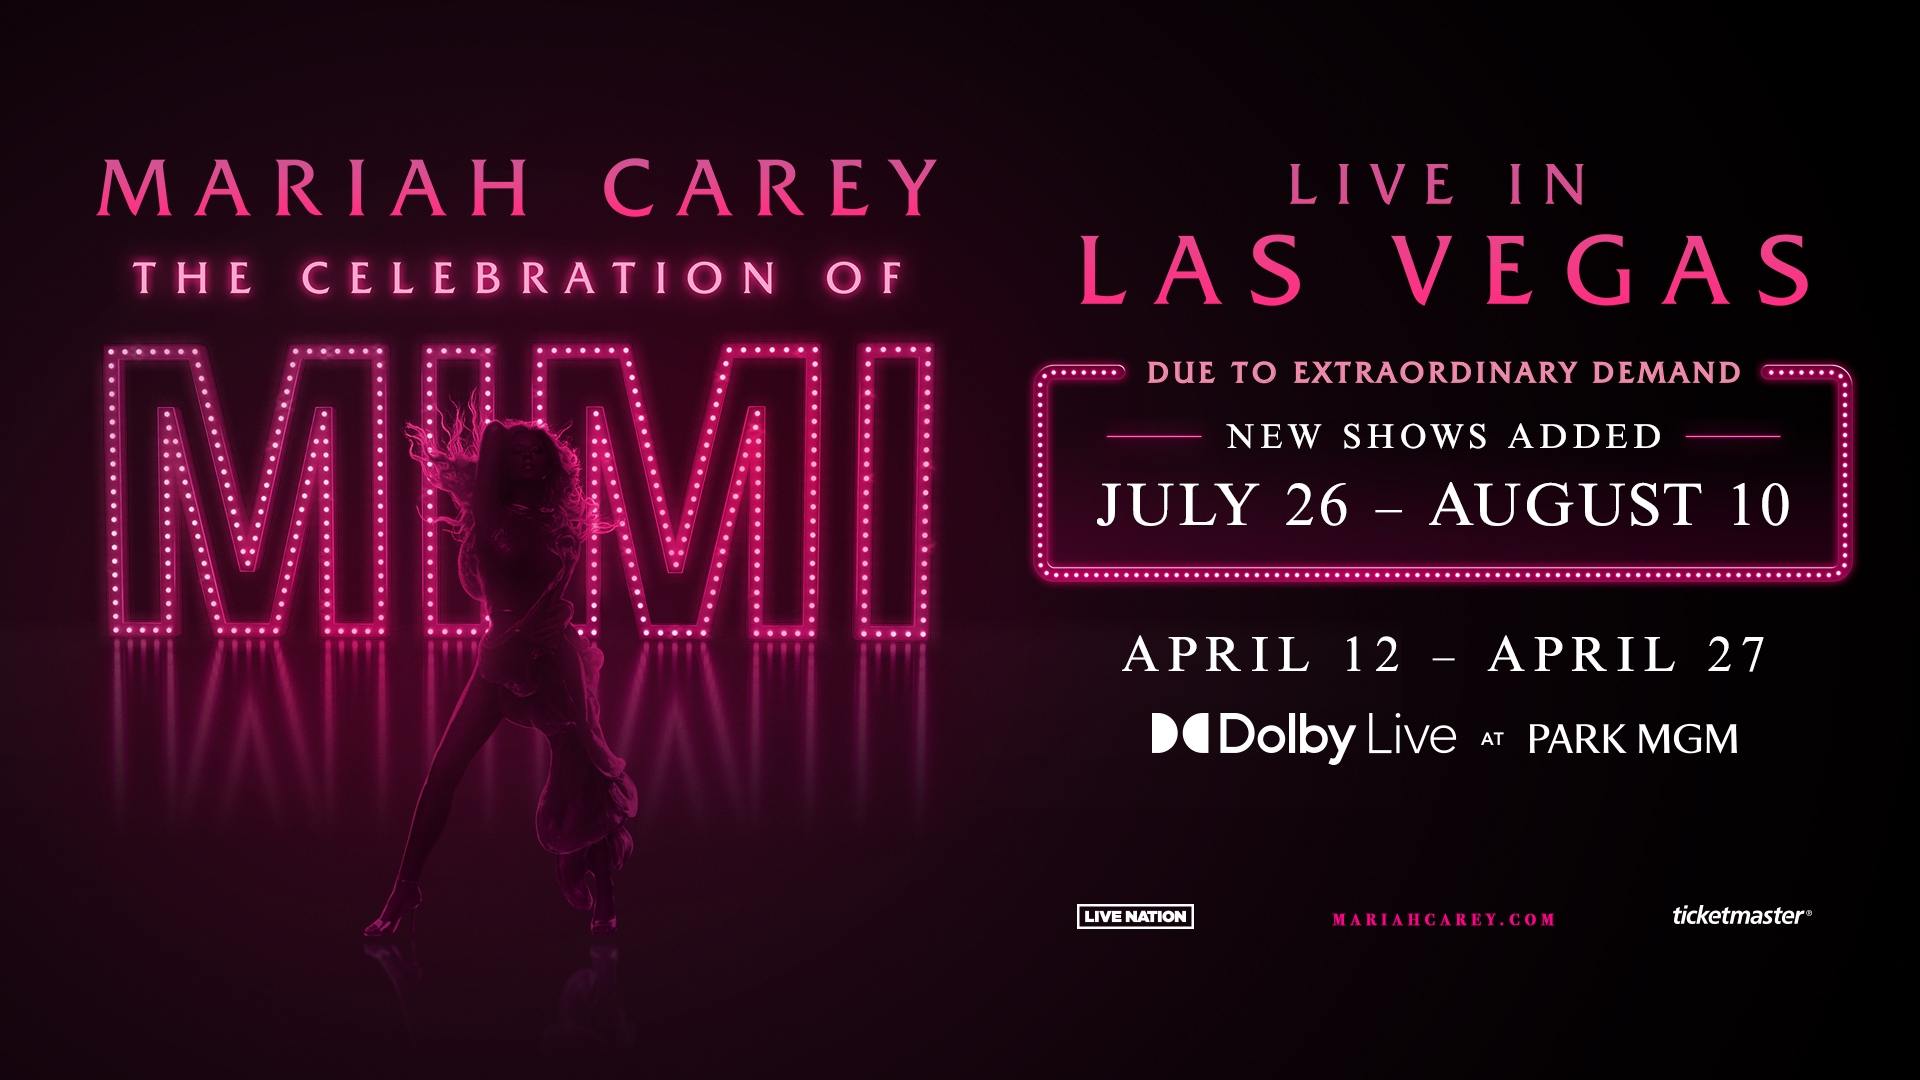 Mariah Carey, Las Vegas, The Celebration of Mimi